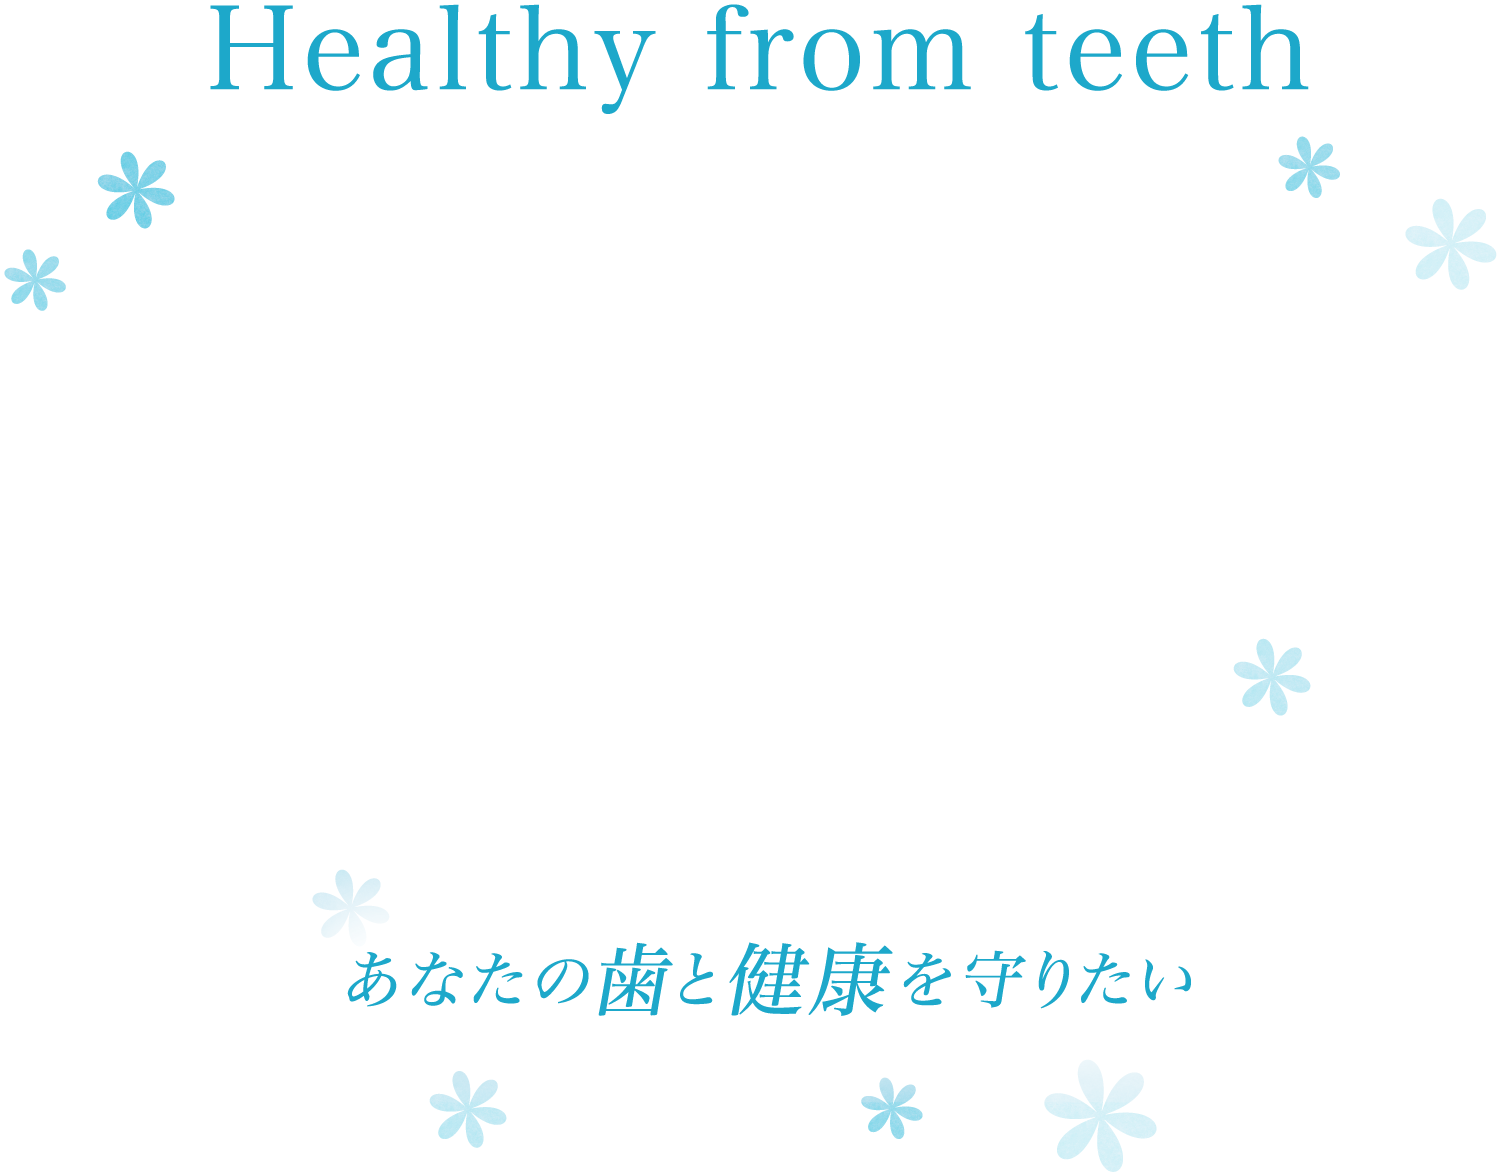 Healty from teeth あなたの歯と健康を守りたい